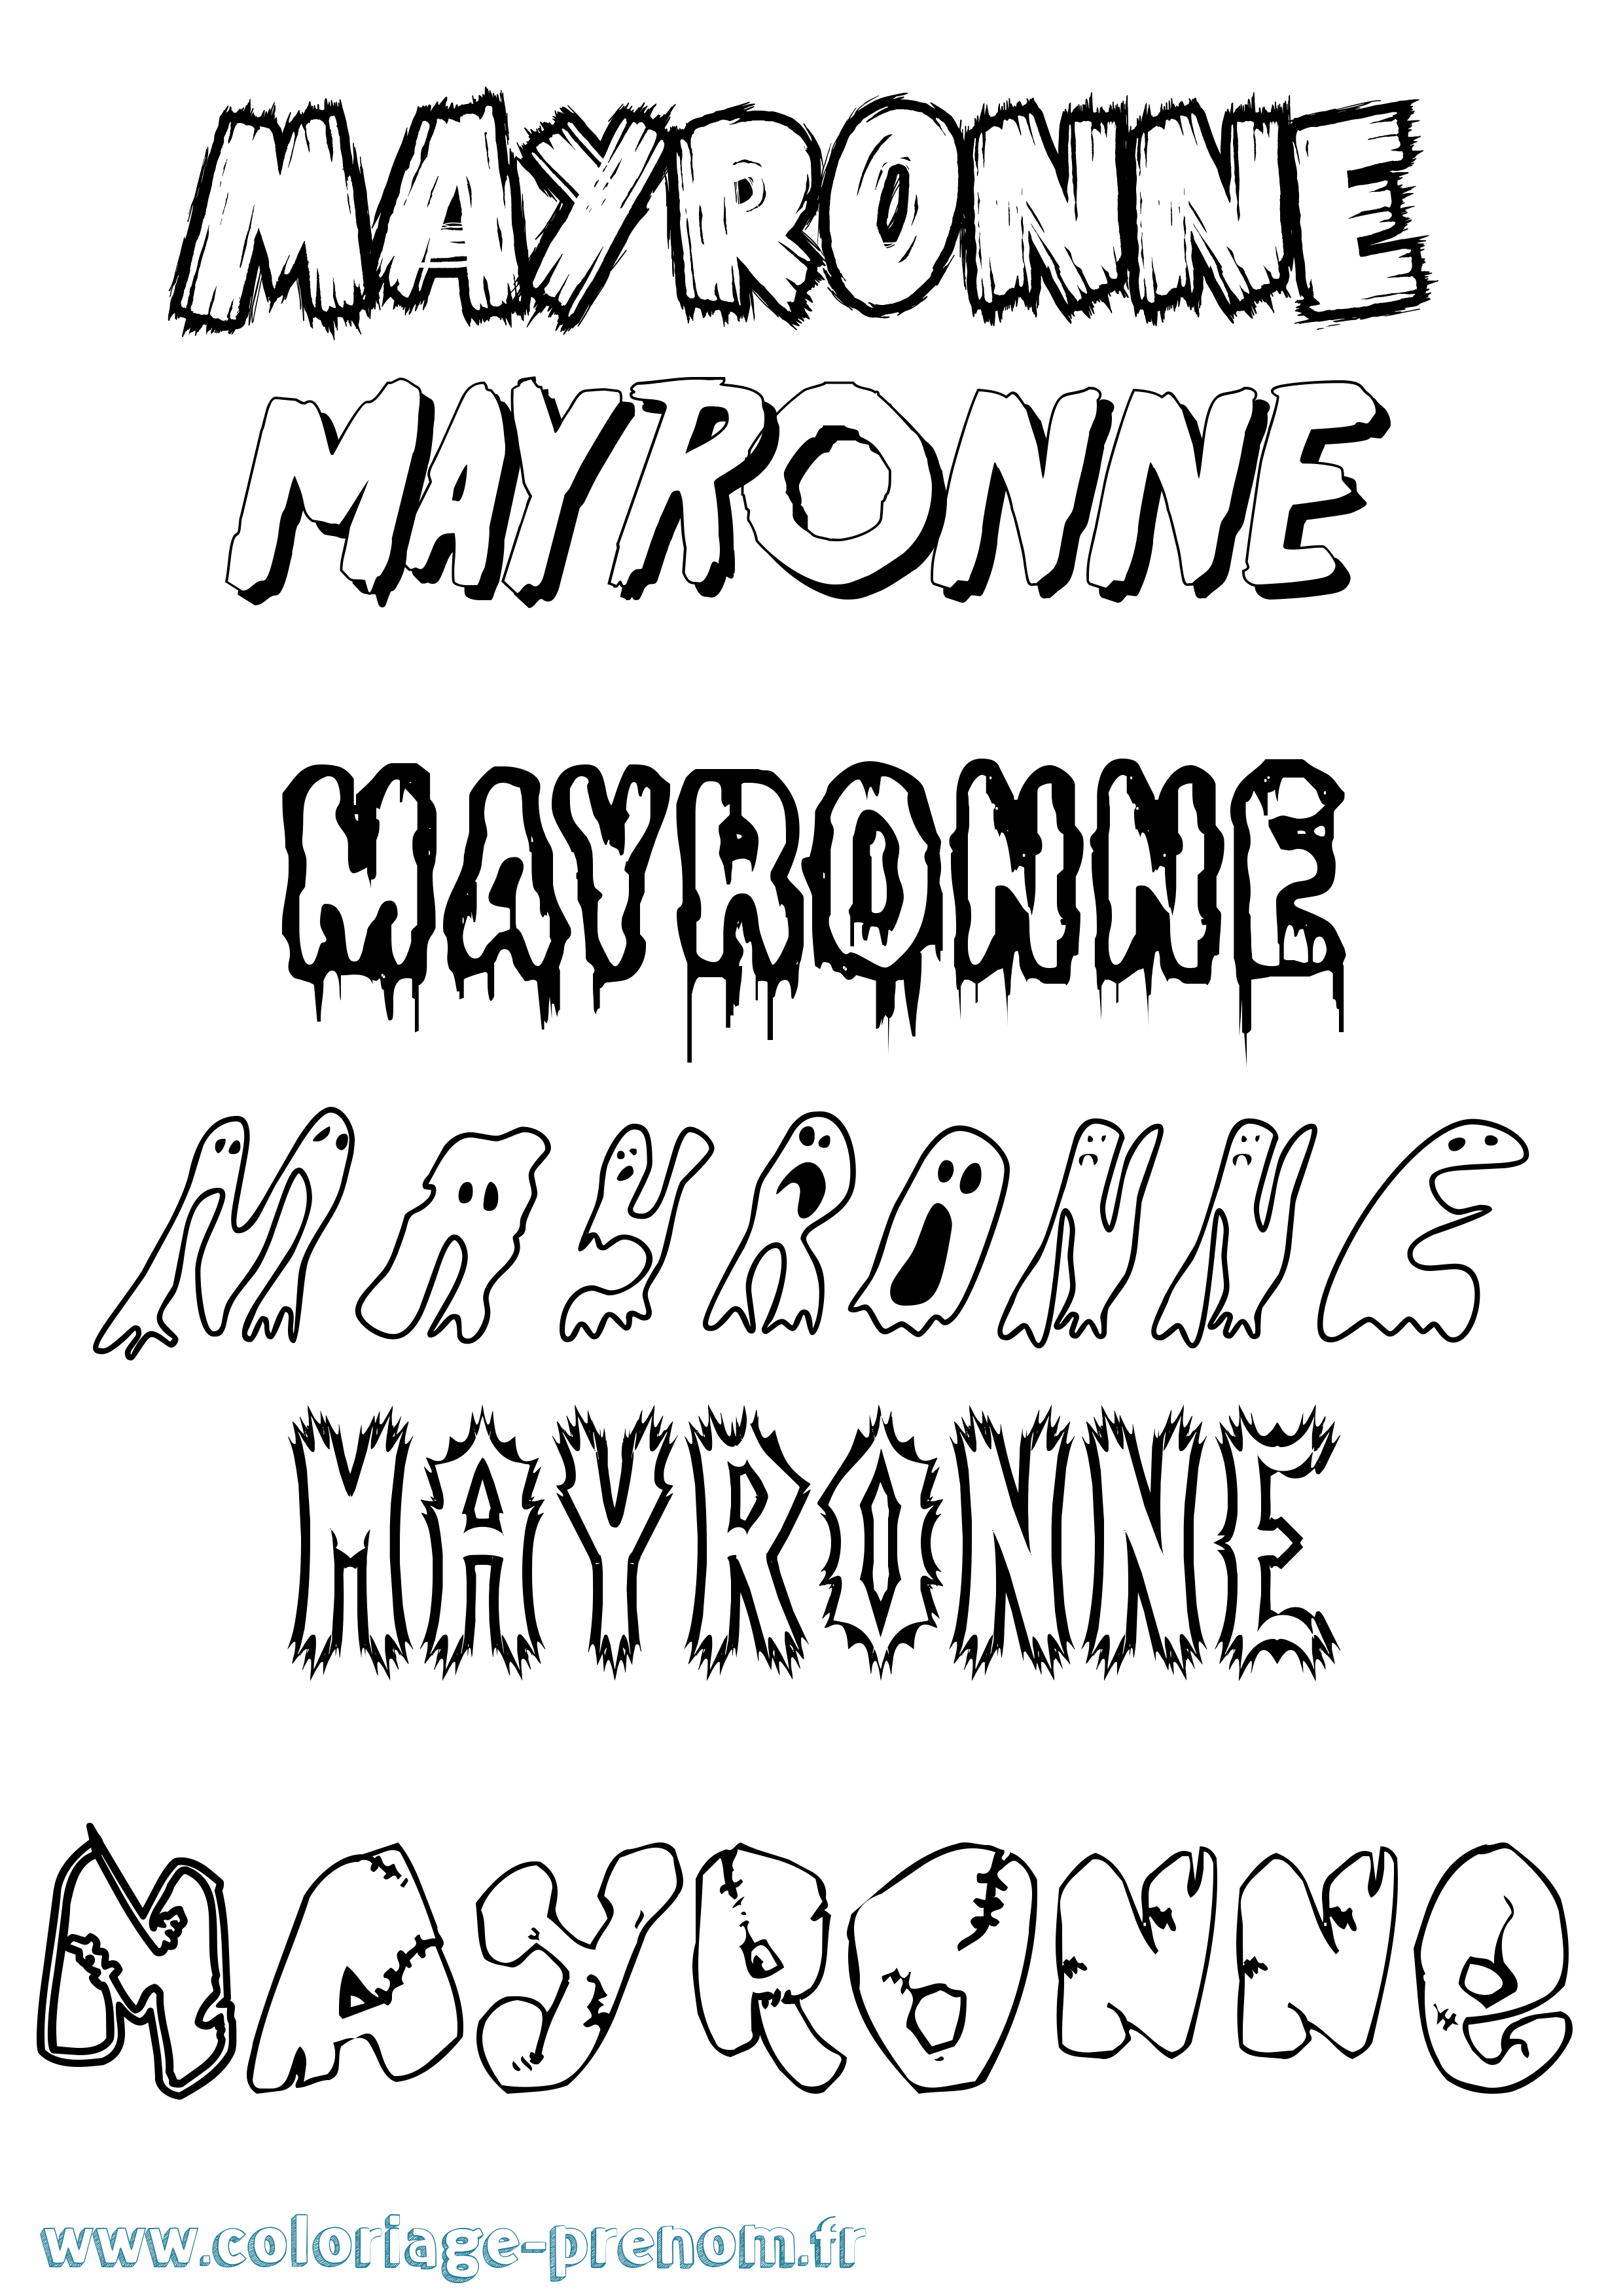 Coloriage prénom Mayronne Frisson